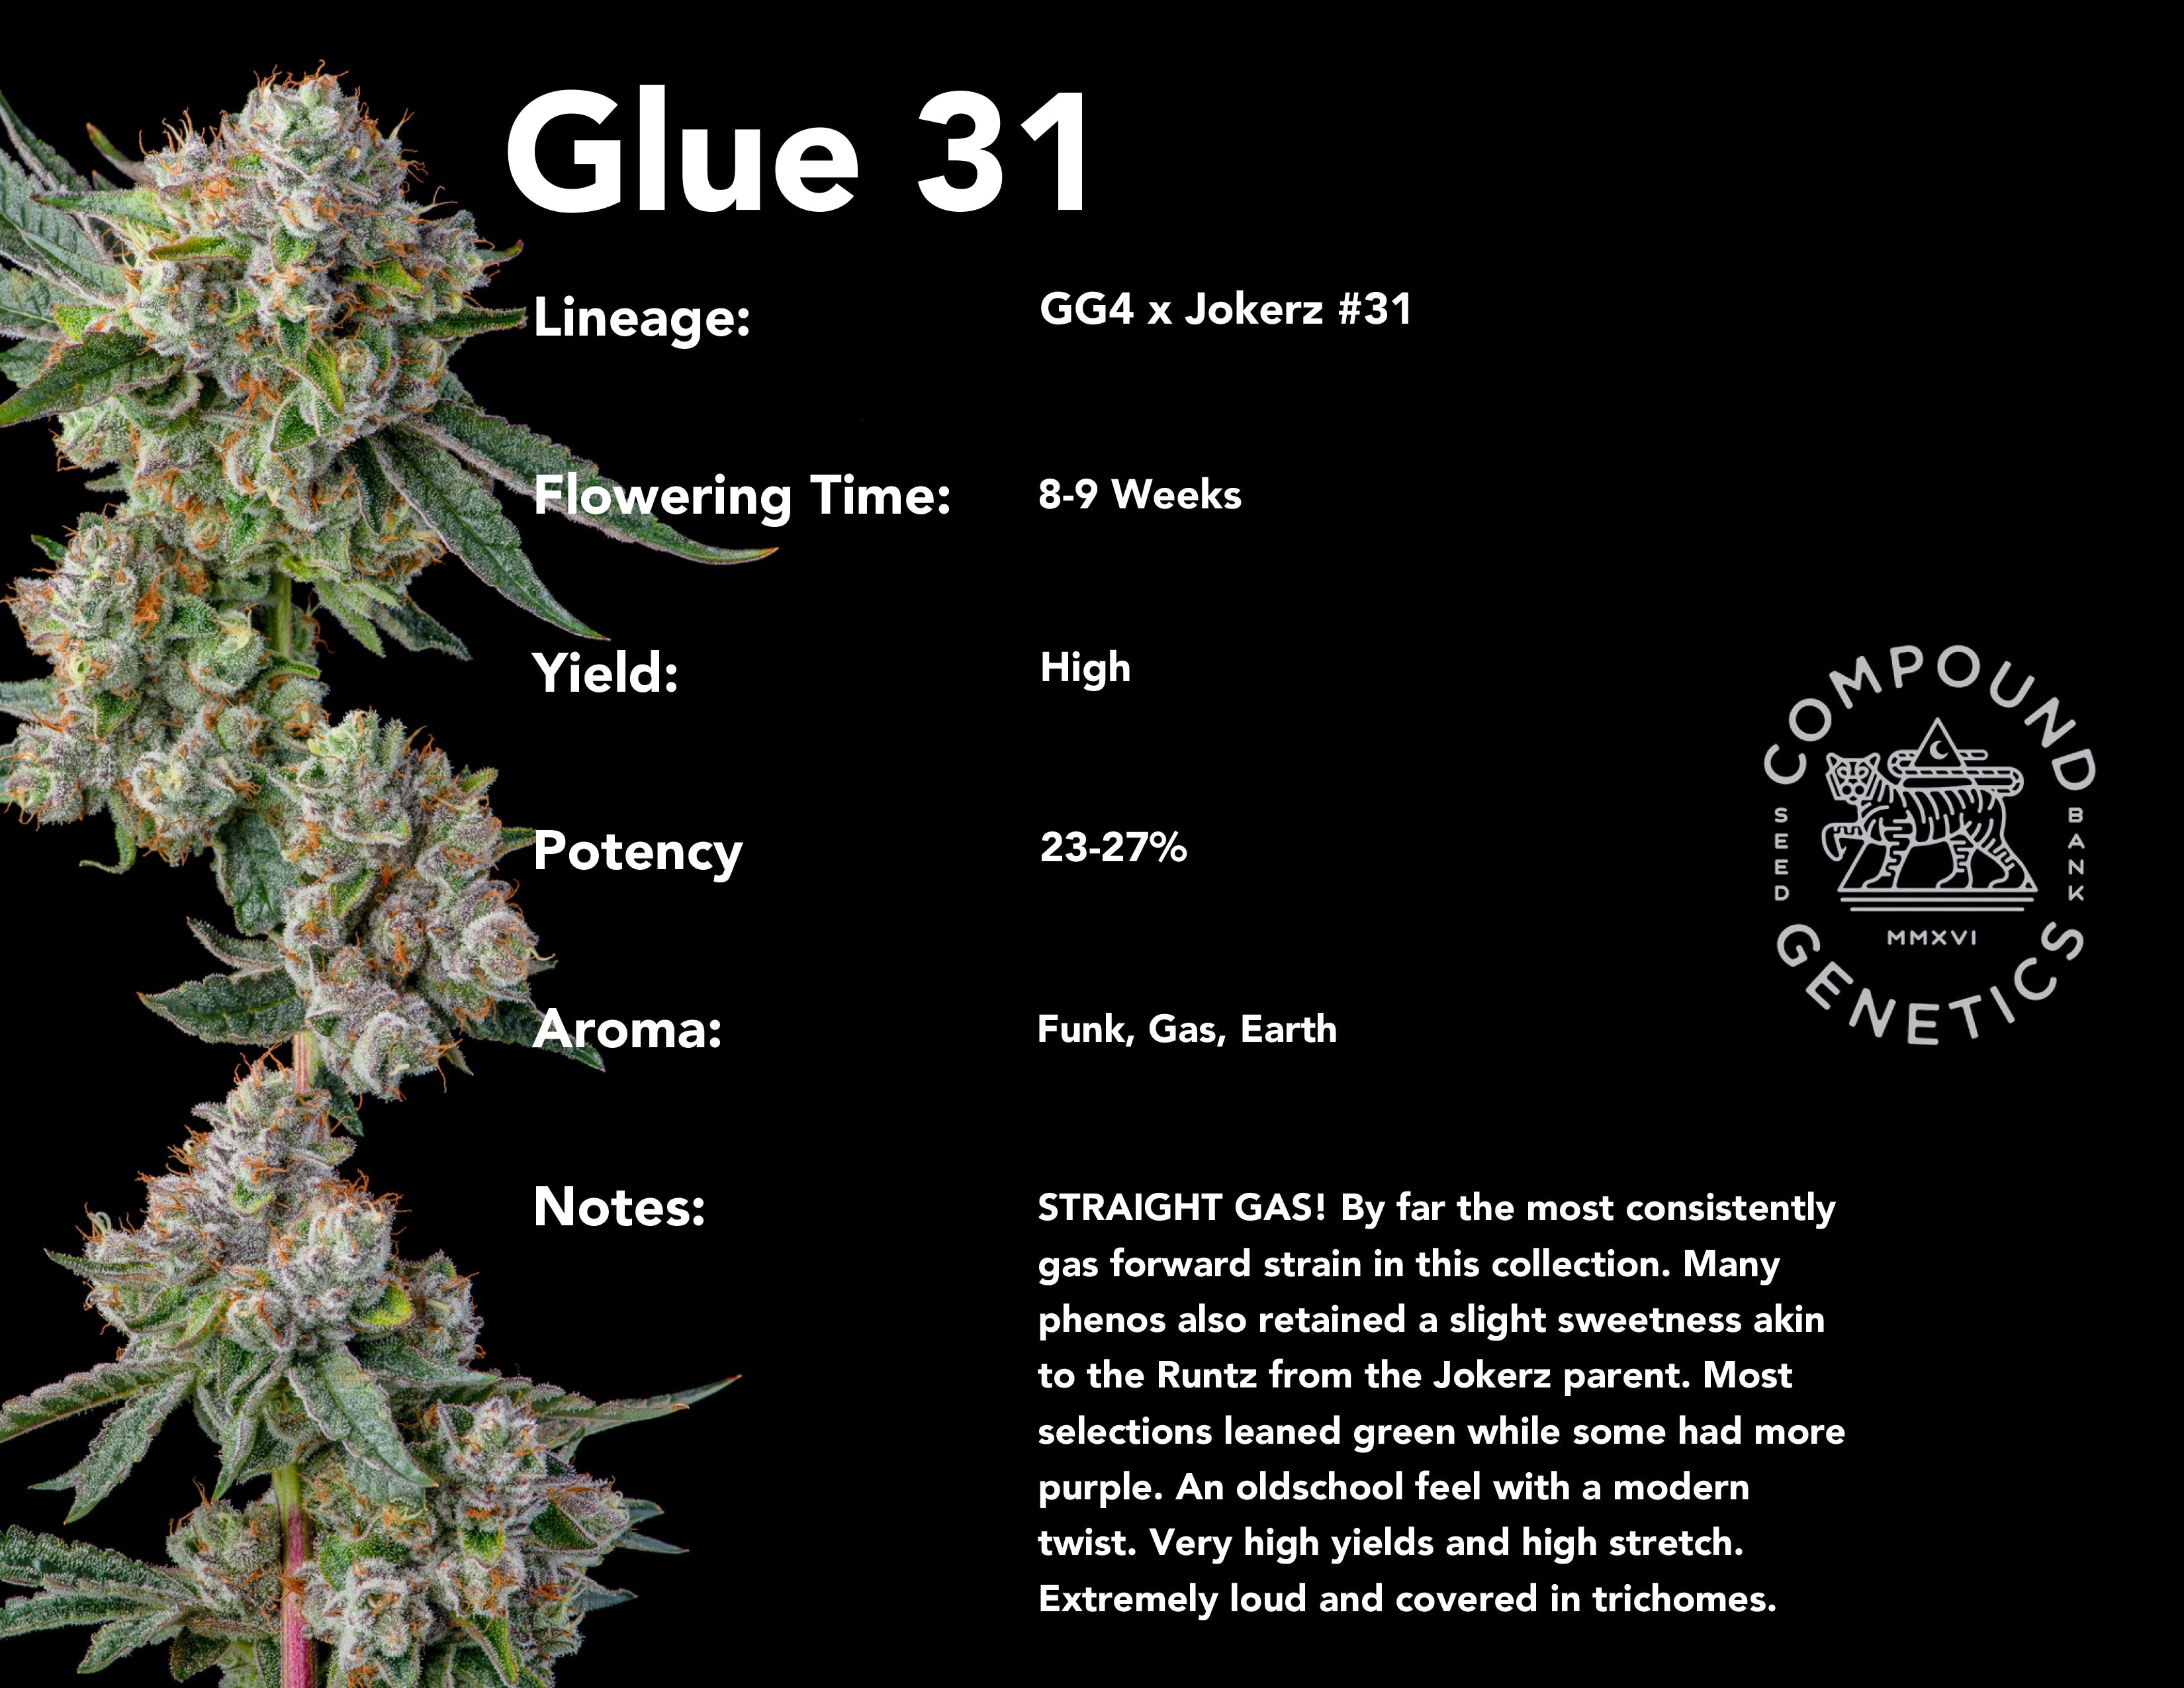 Glue 31 bred by Compound Genetics